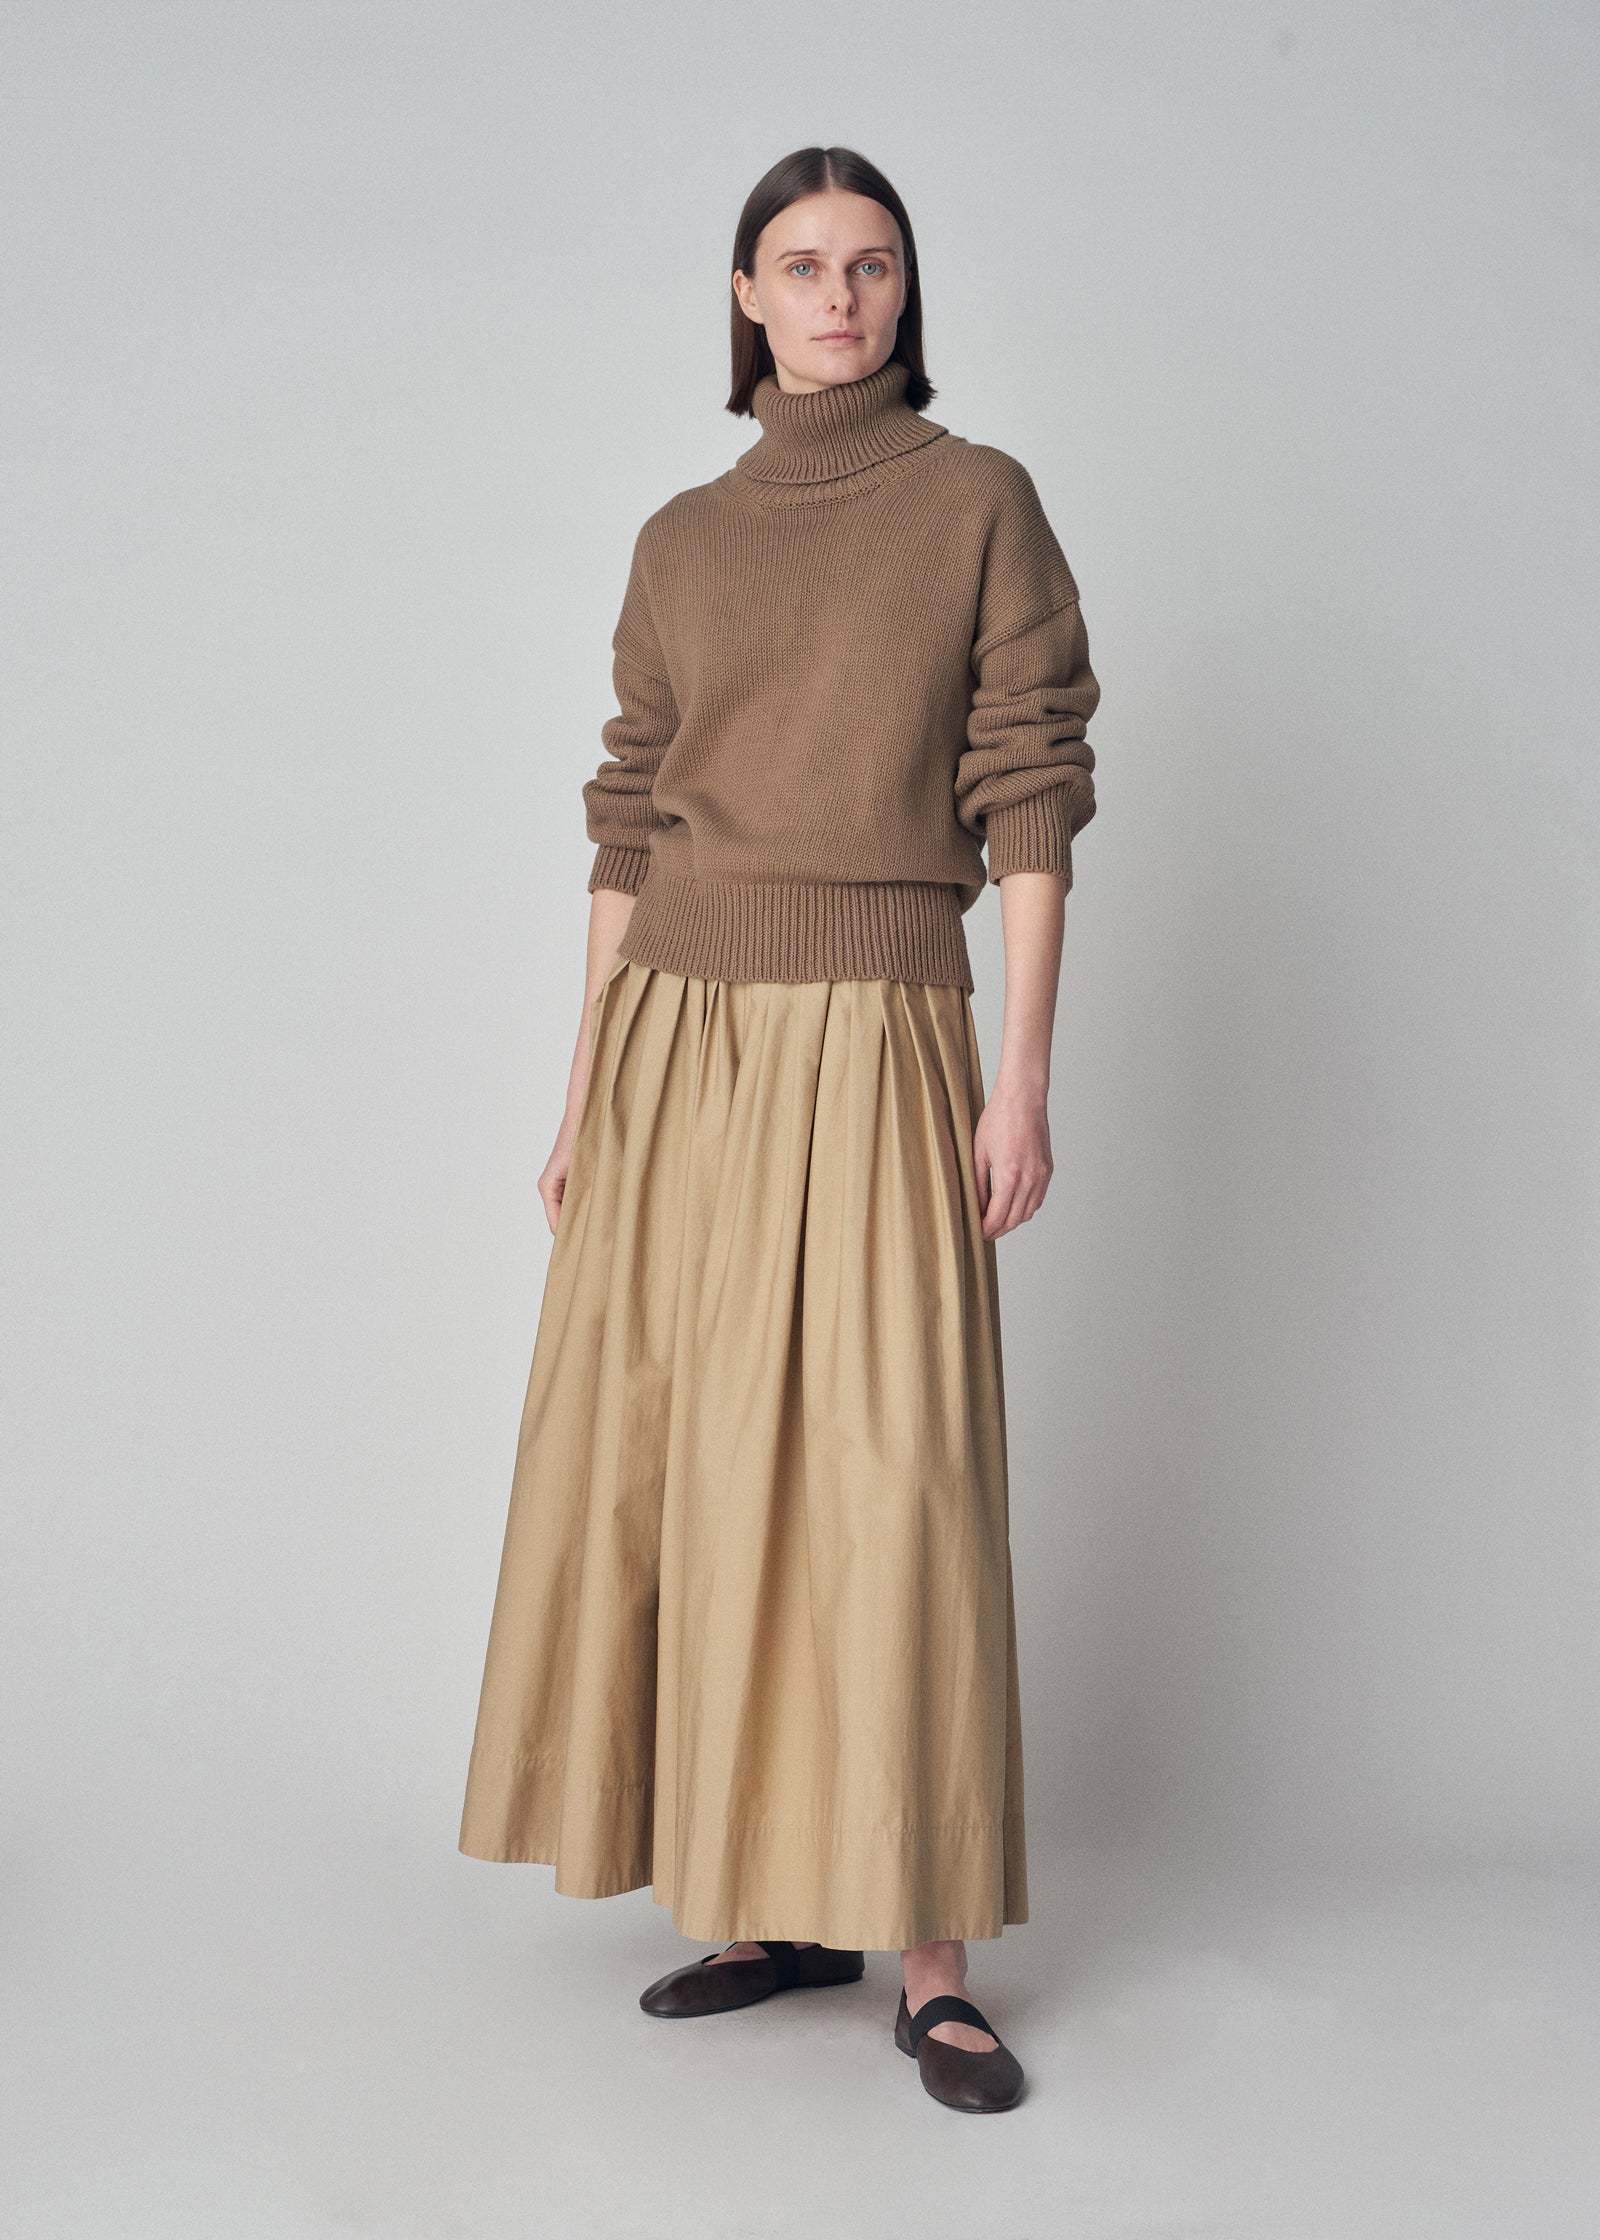 Pull On Midi Skirt in Cotton Poplin -  Khaki - CO Collections